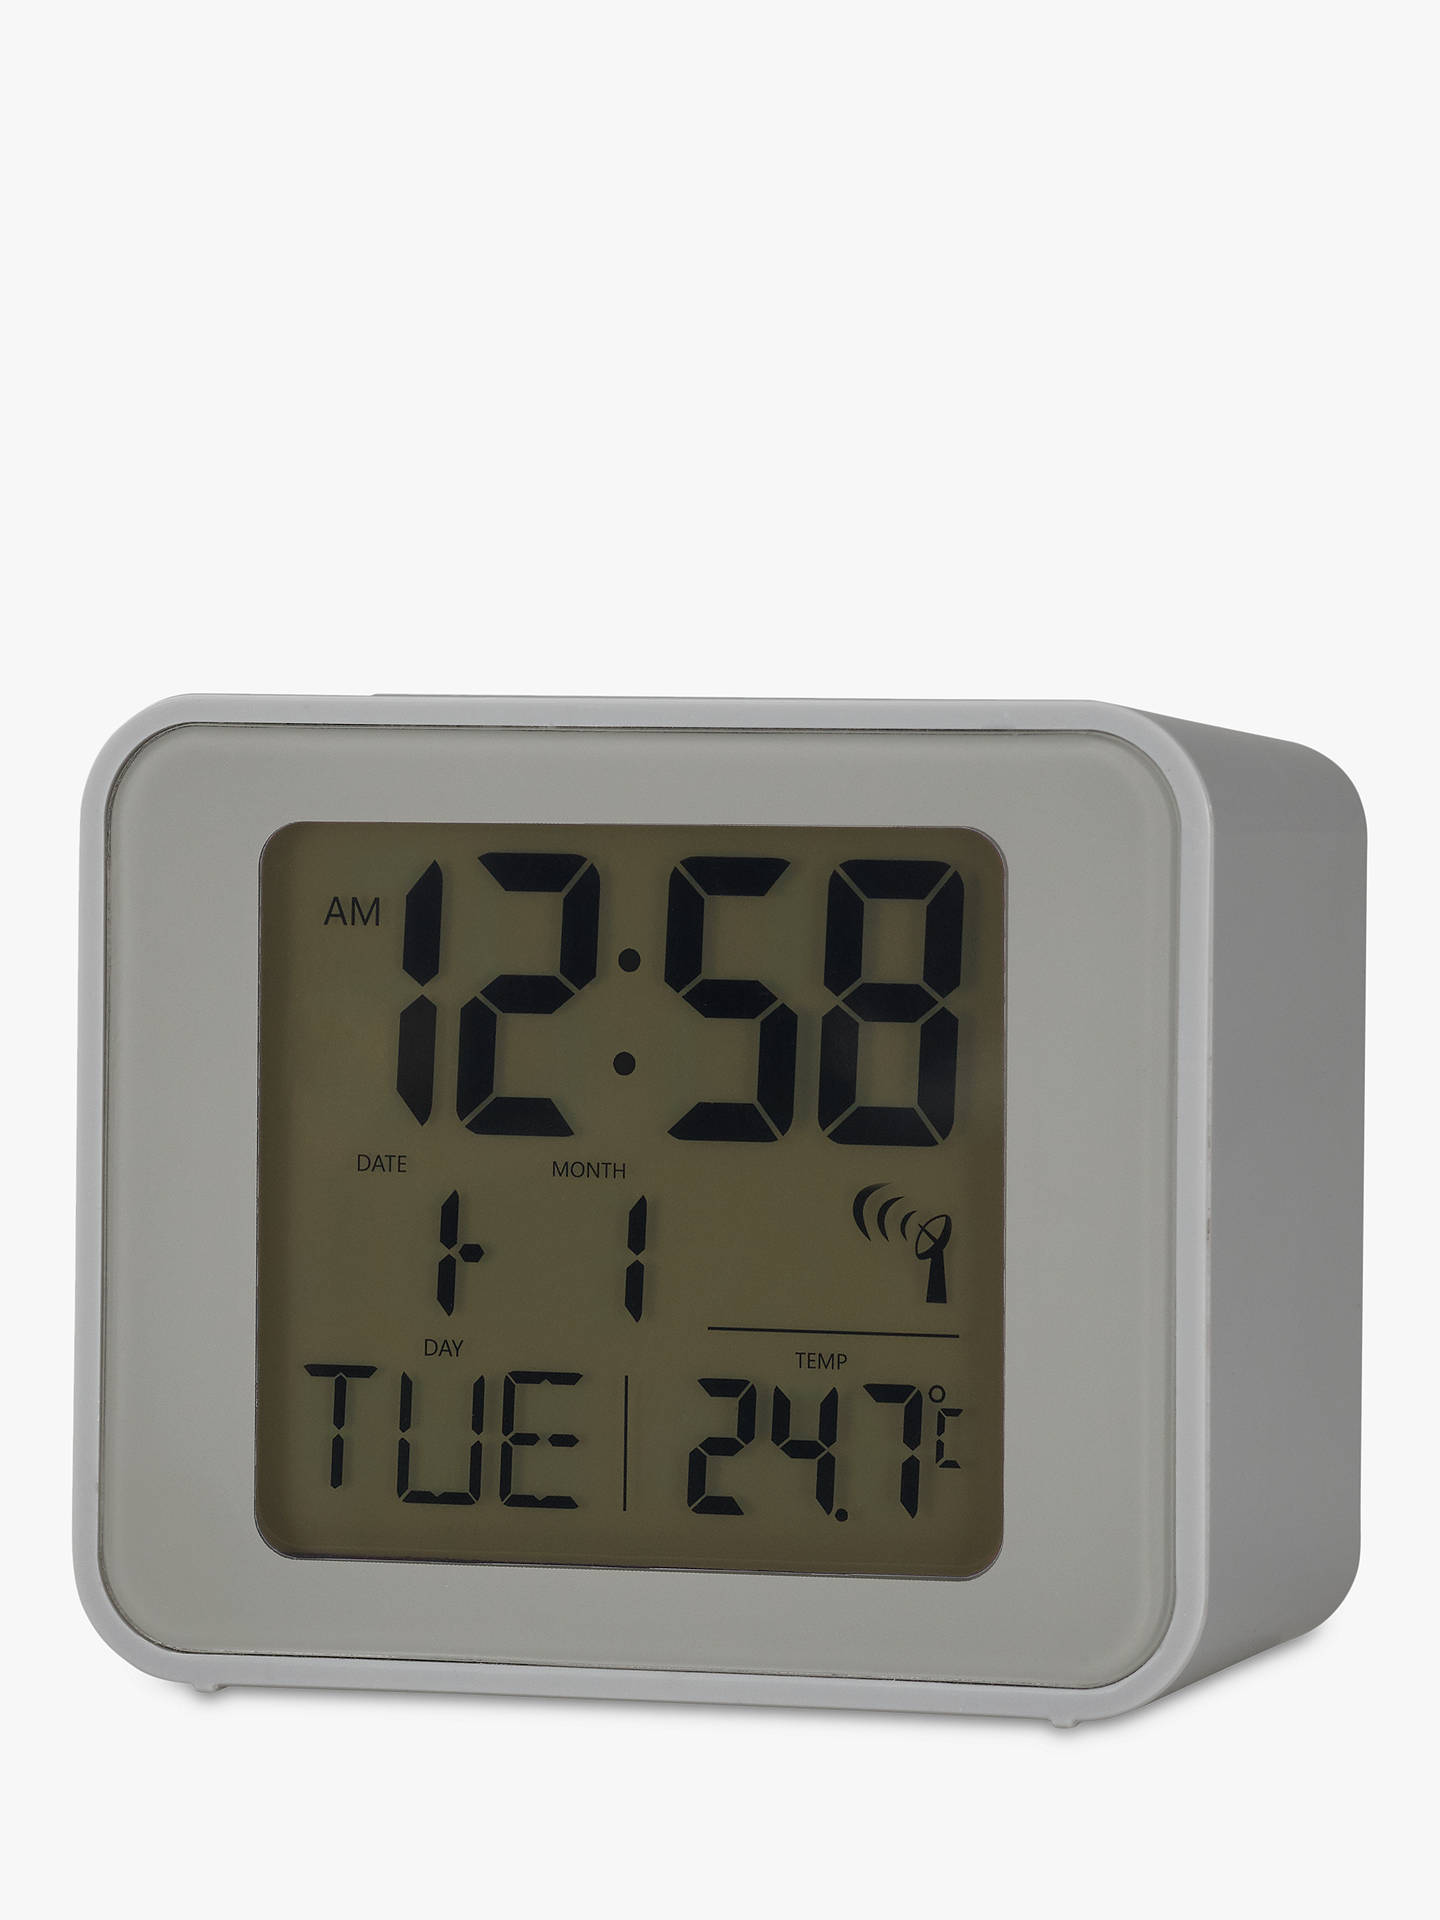 Acctim Radio Controlled Digital Alarm Clock at John Lewis